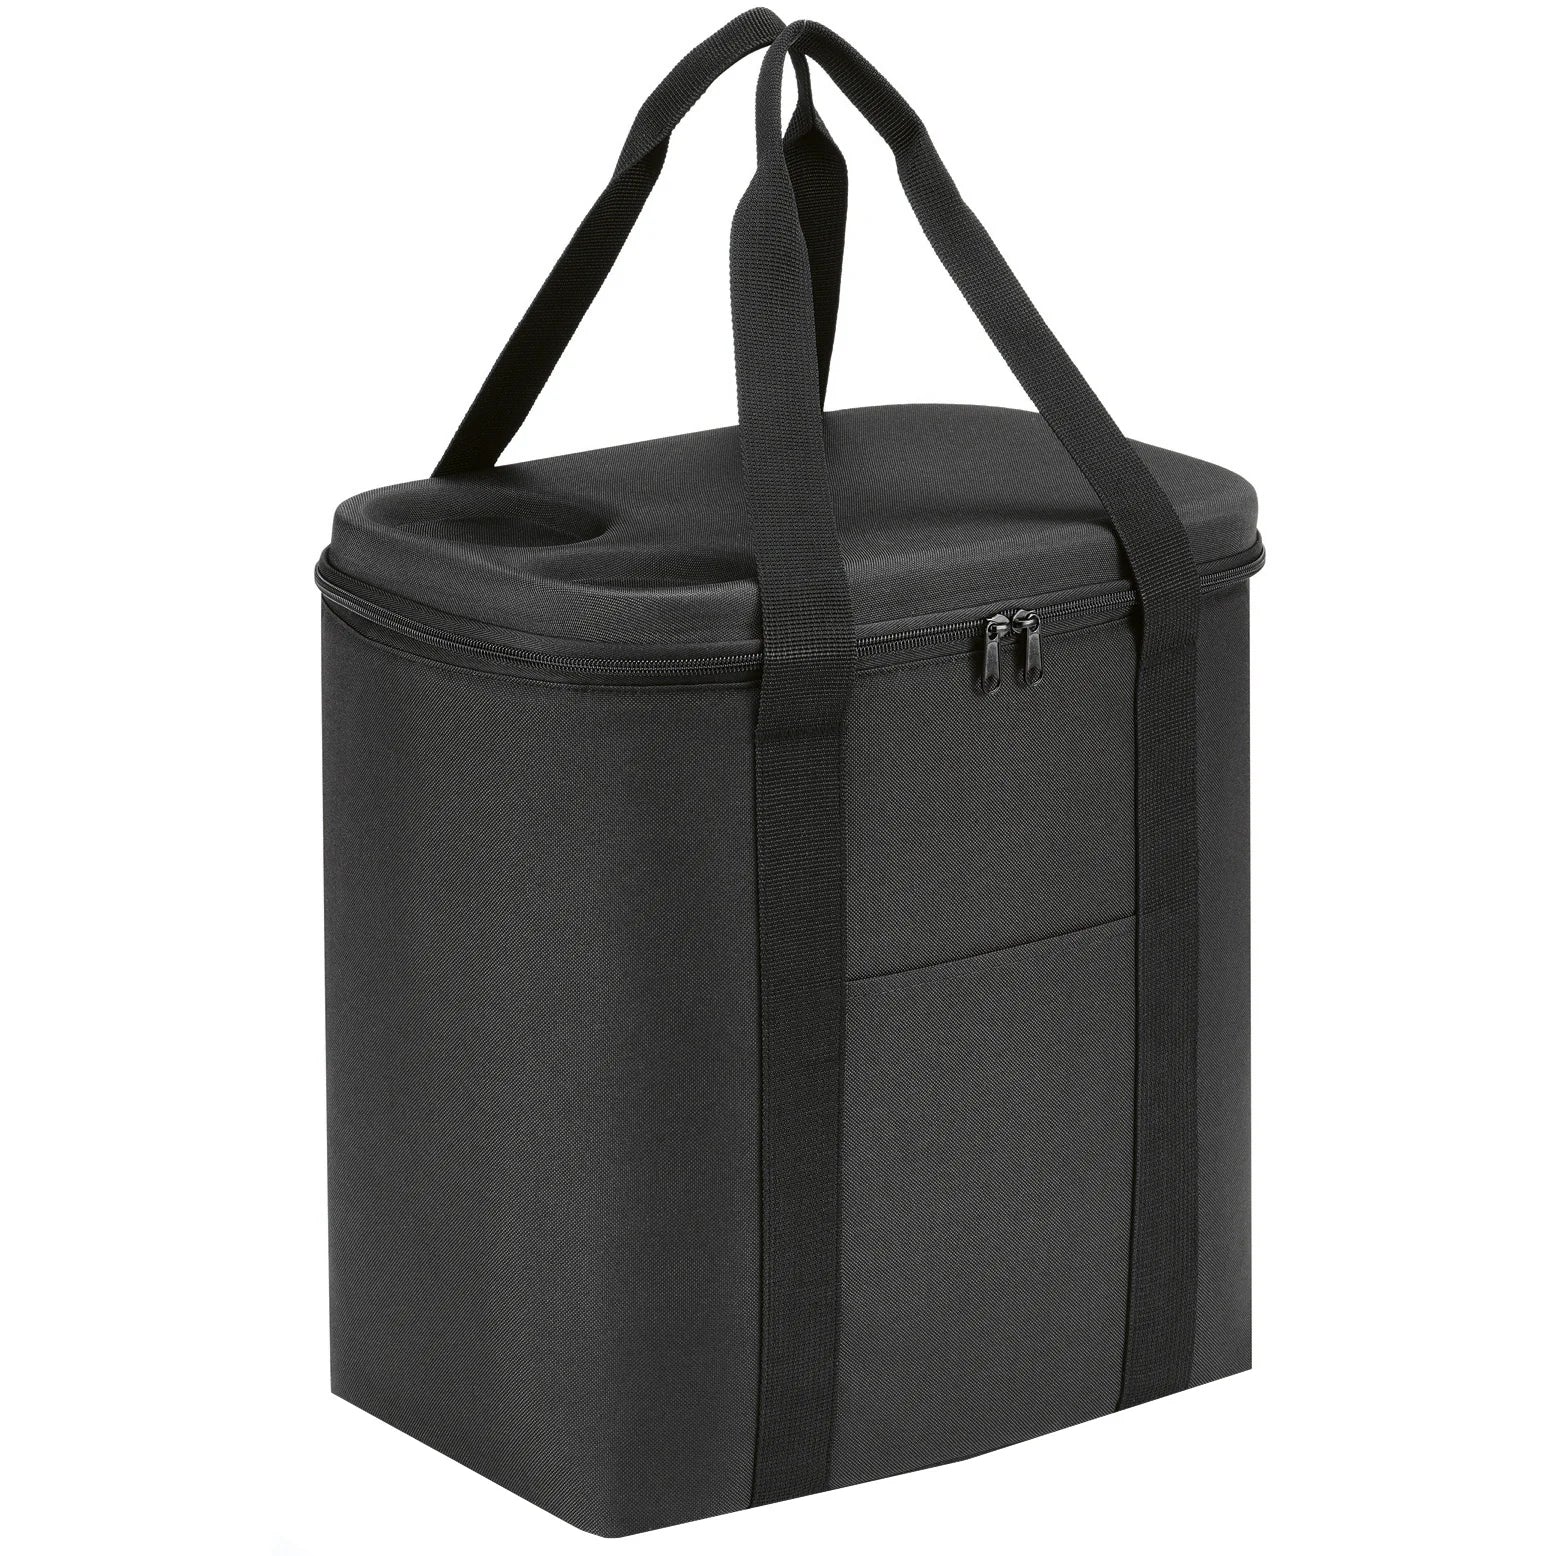 Reisenthel Shopping Coolerbag XL 41 cm - Black